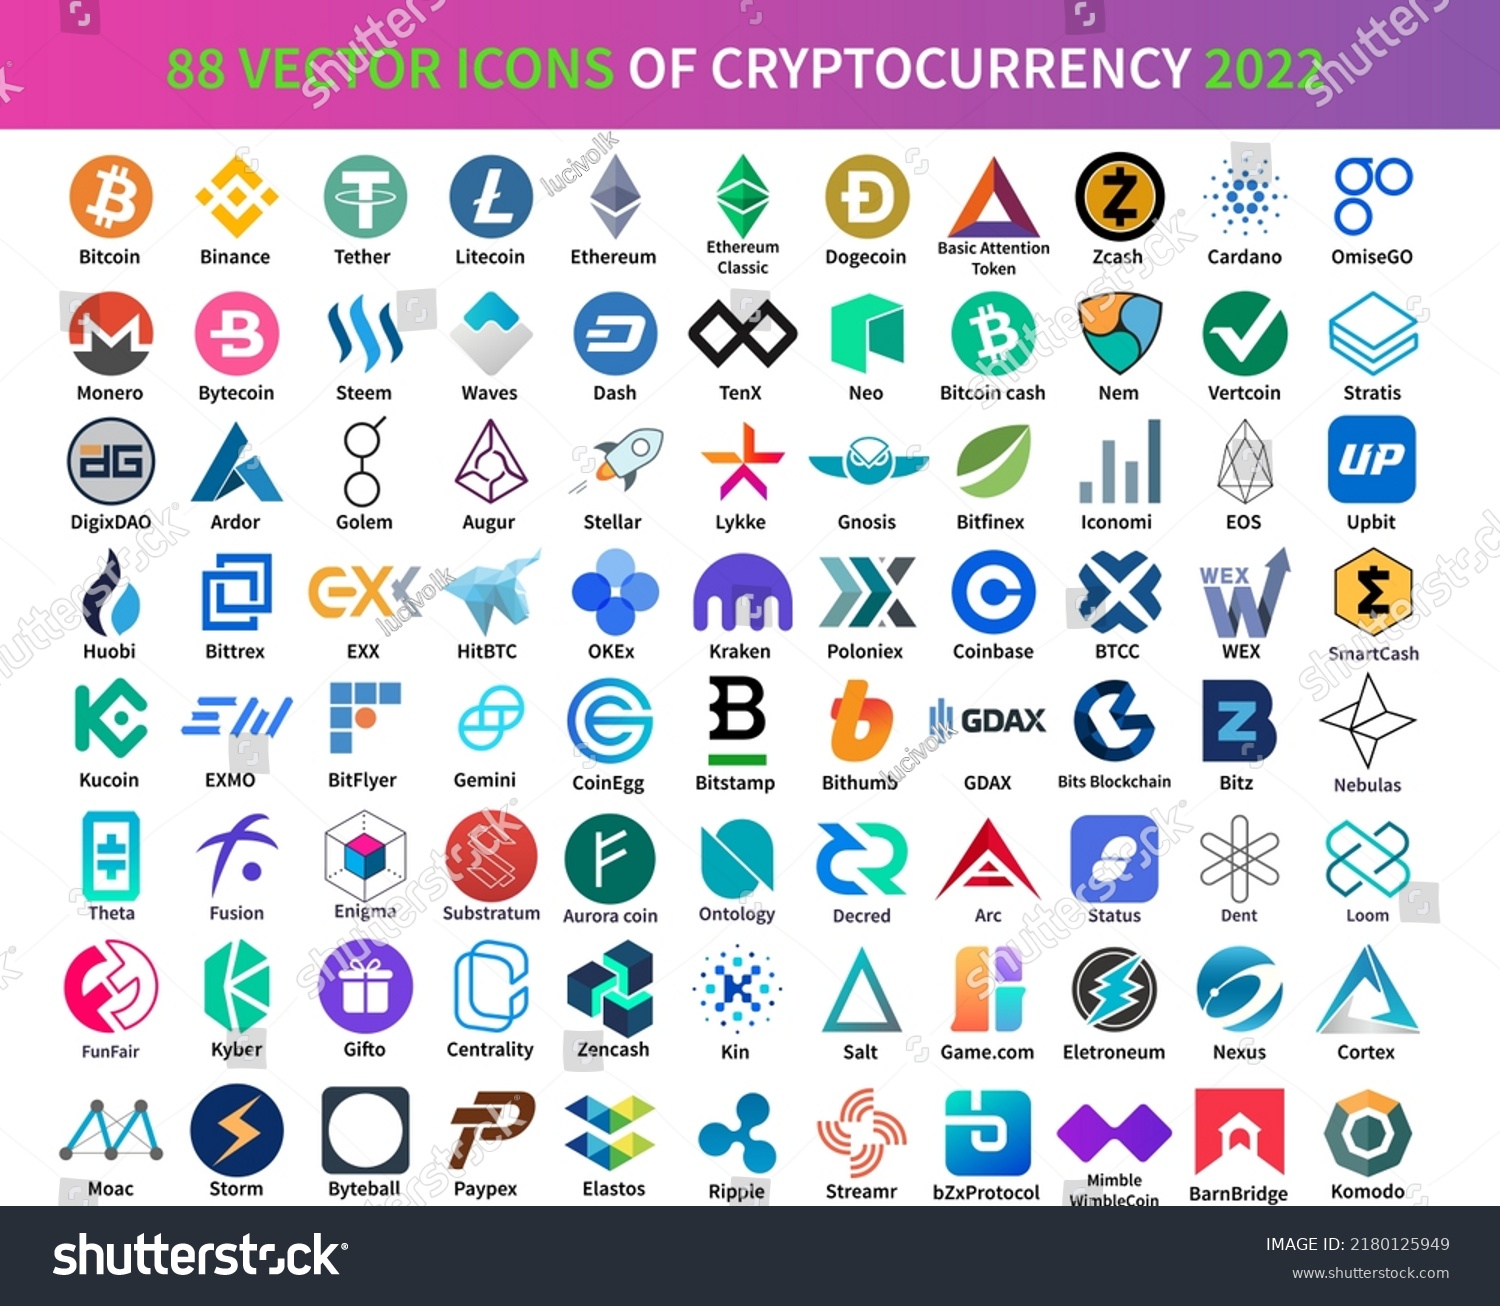 SVG of Set of logotypes of cryptocurrency and platforms: bitcoin, binance, tether, litecoin, ethereum, dogecoin, zcash, cardano, omiseGo, stratis, vertcoin, nem, neo, tenX, dash, waves, steem, bytecoin etc svg